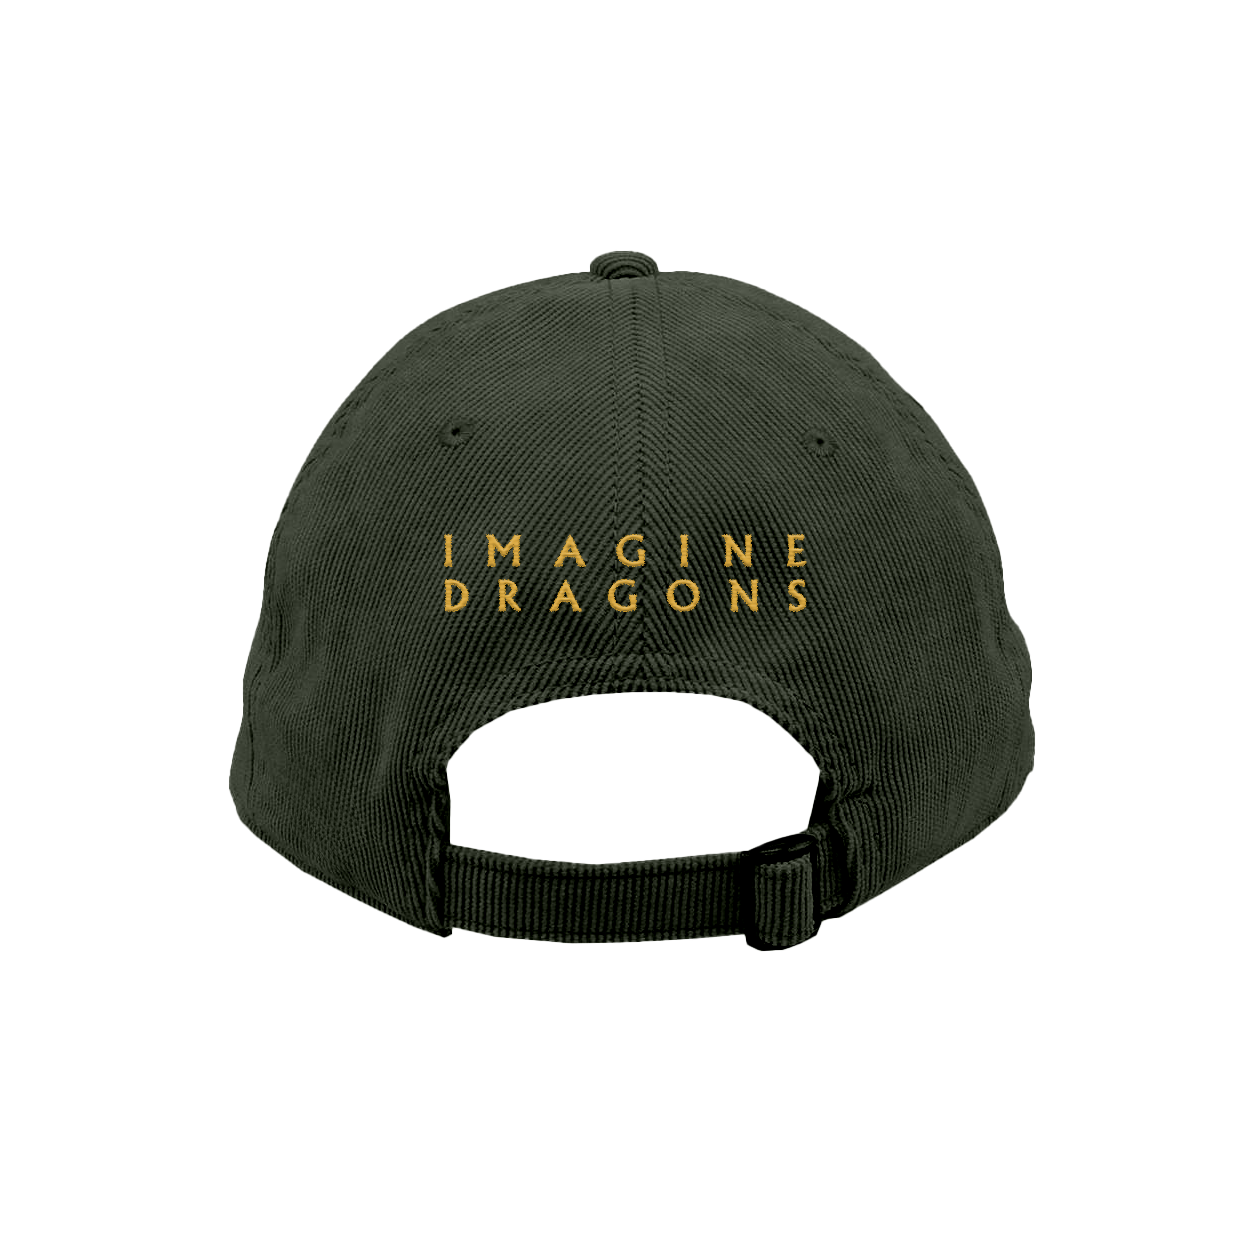 Imagine Dragons - Loom Globe Hat